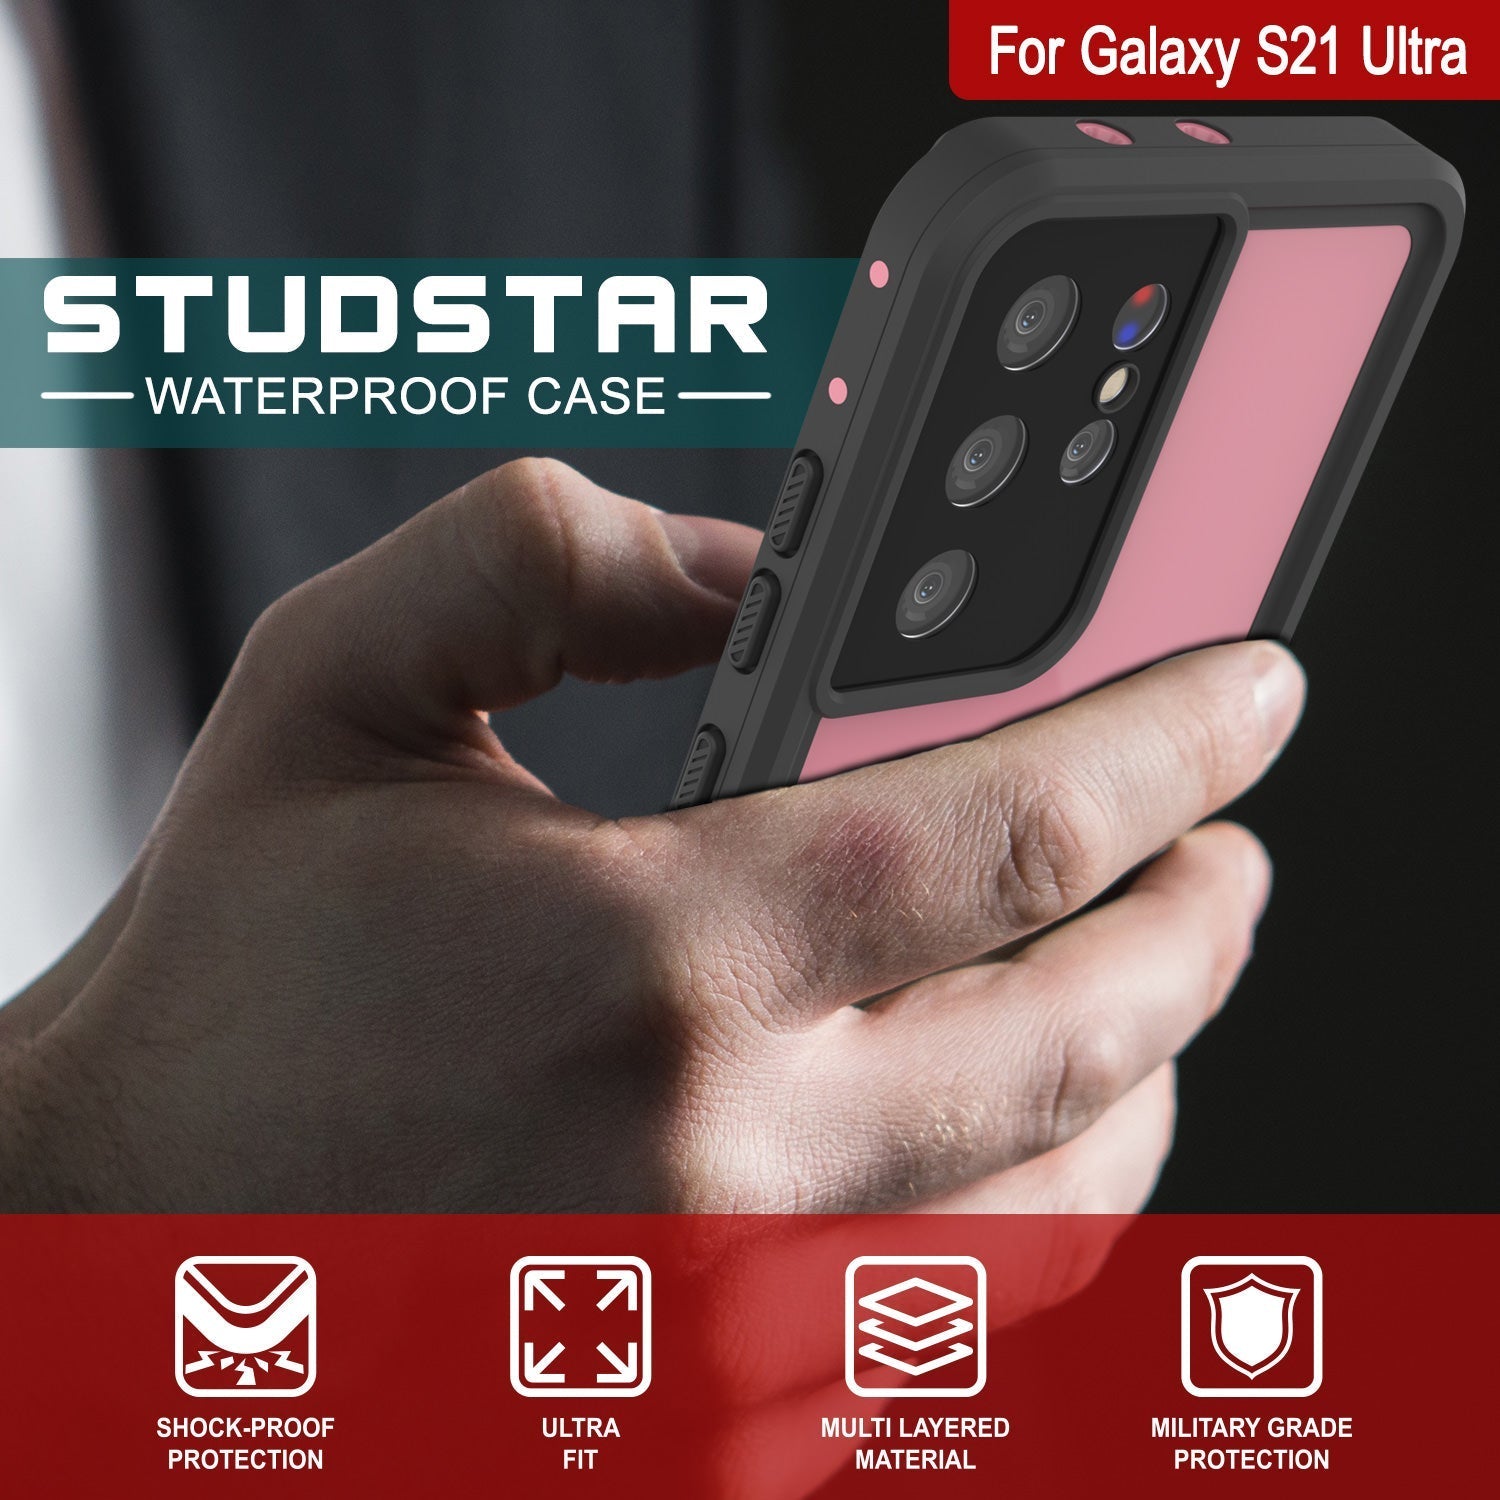 Galaxy S22 Ultra Waterproof Case PunkCase StudStar Pink Thin 6.6ft Underwater IP68 Shock/Snow Proof